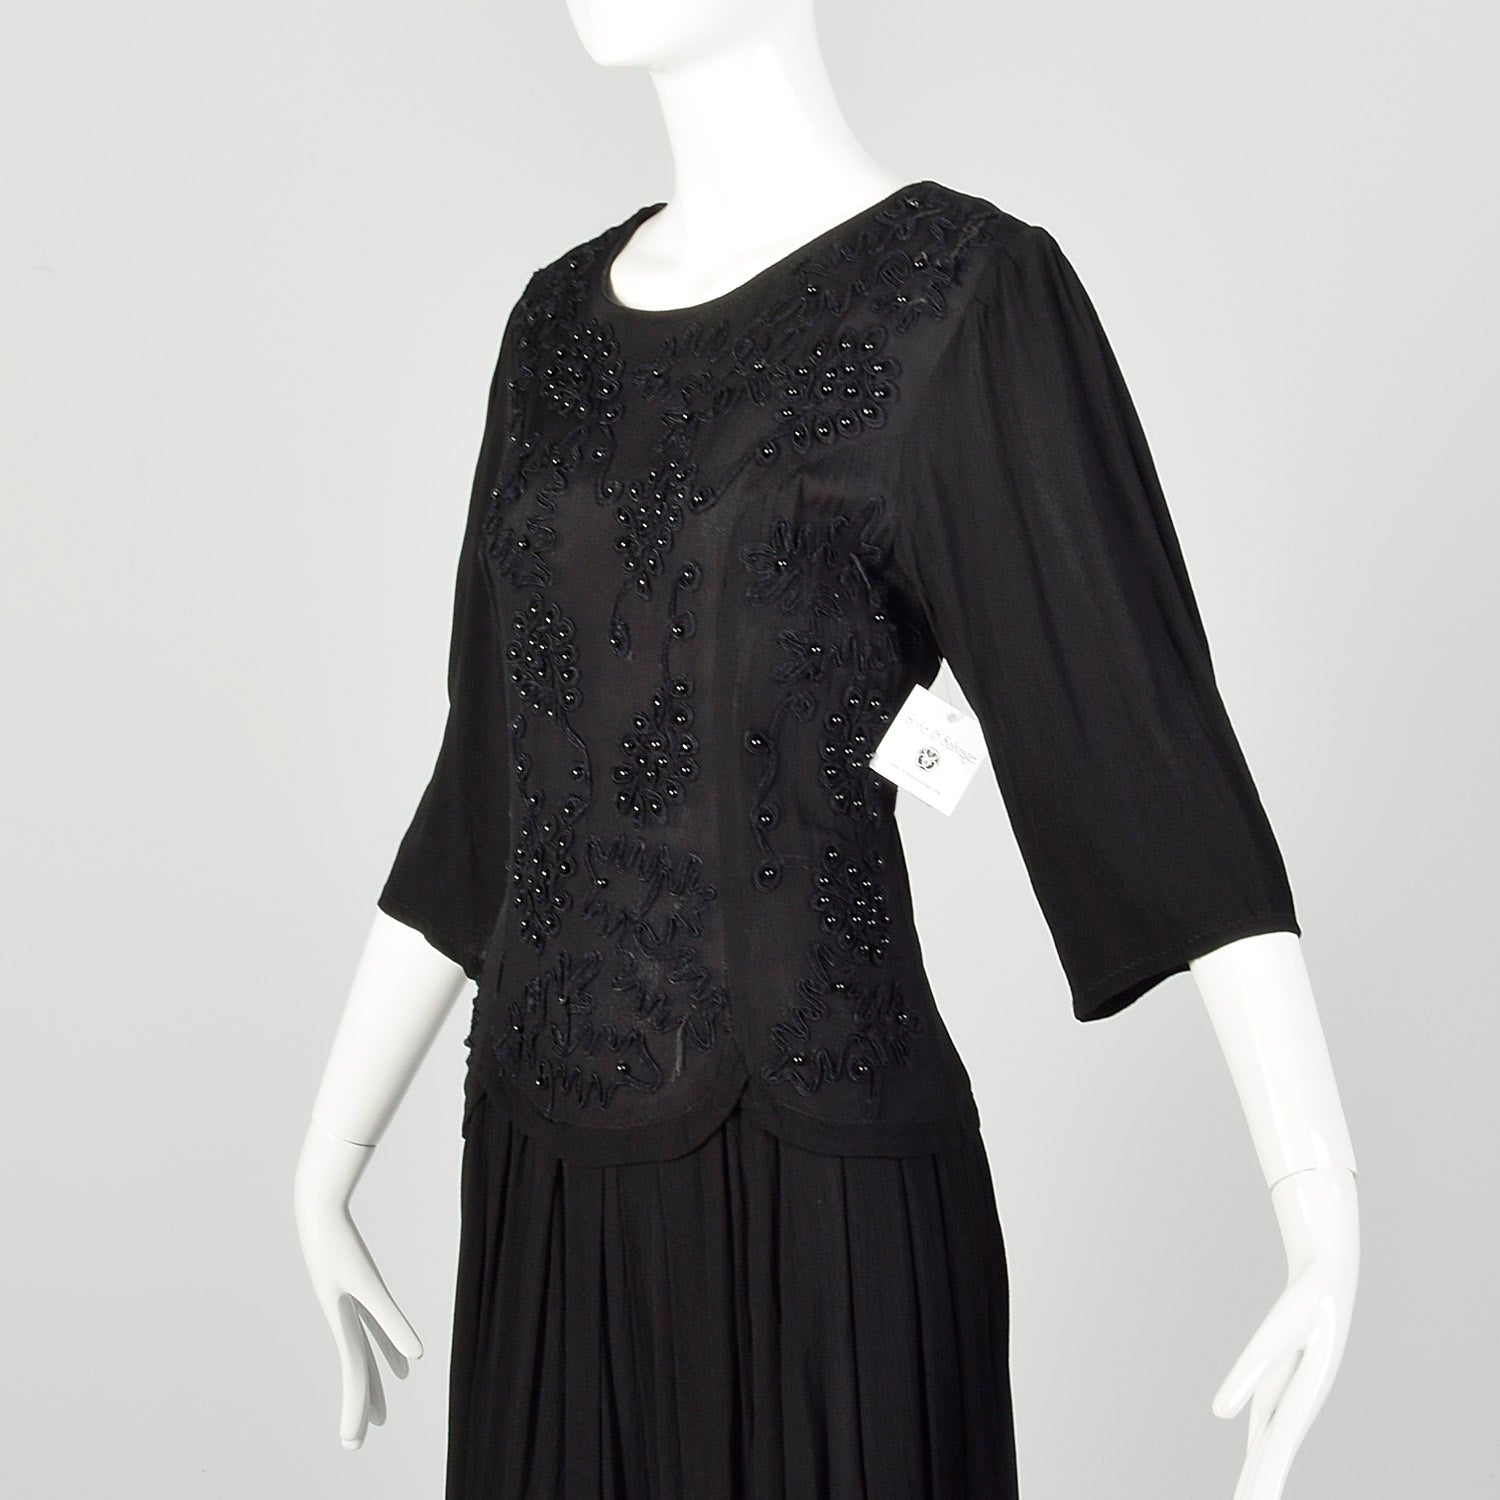 Medium 1990s Dress Black Beaded Crepe Quarter-Sleeve LBD